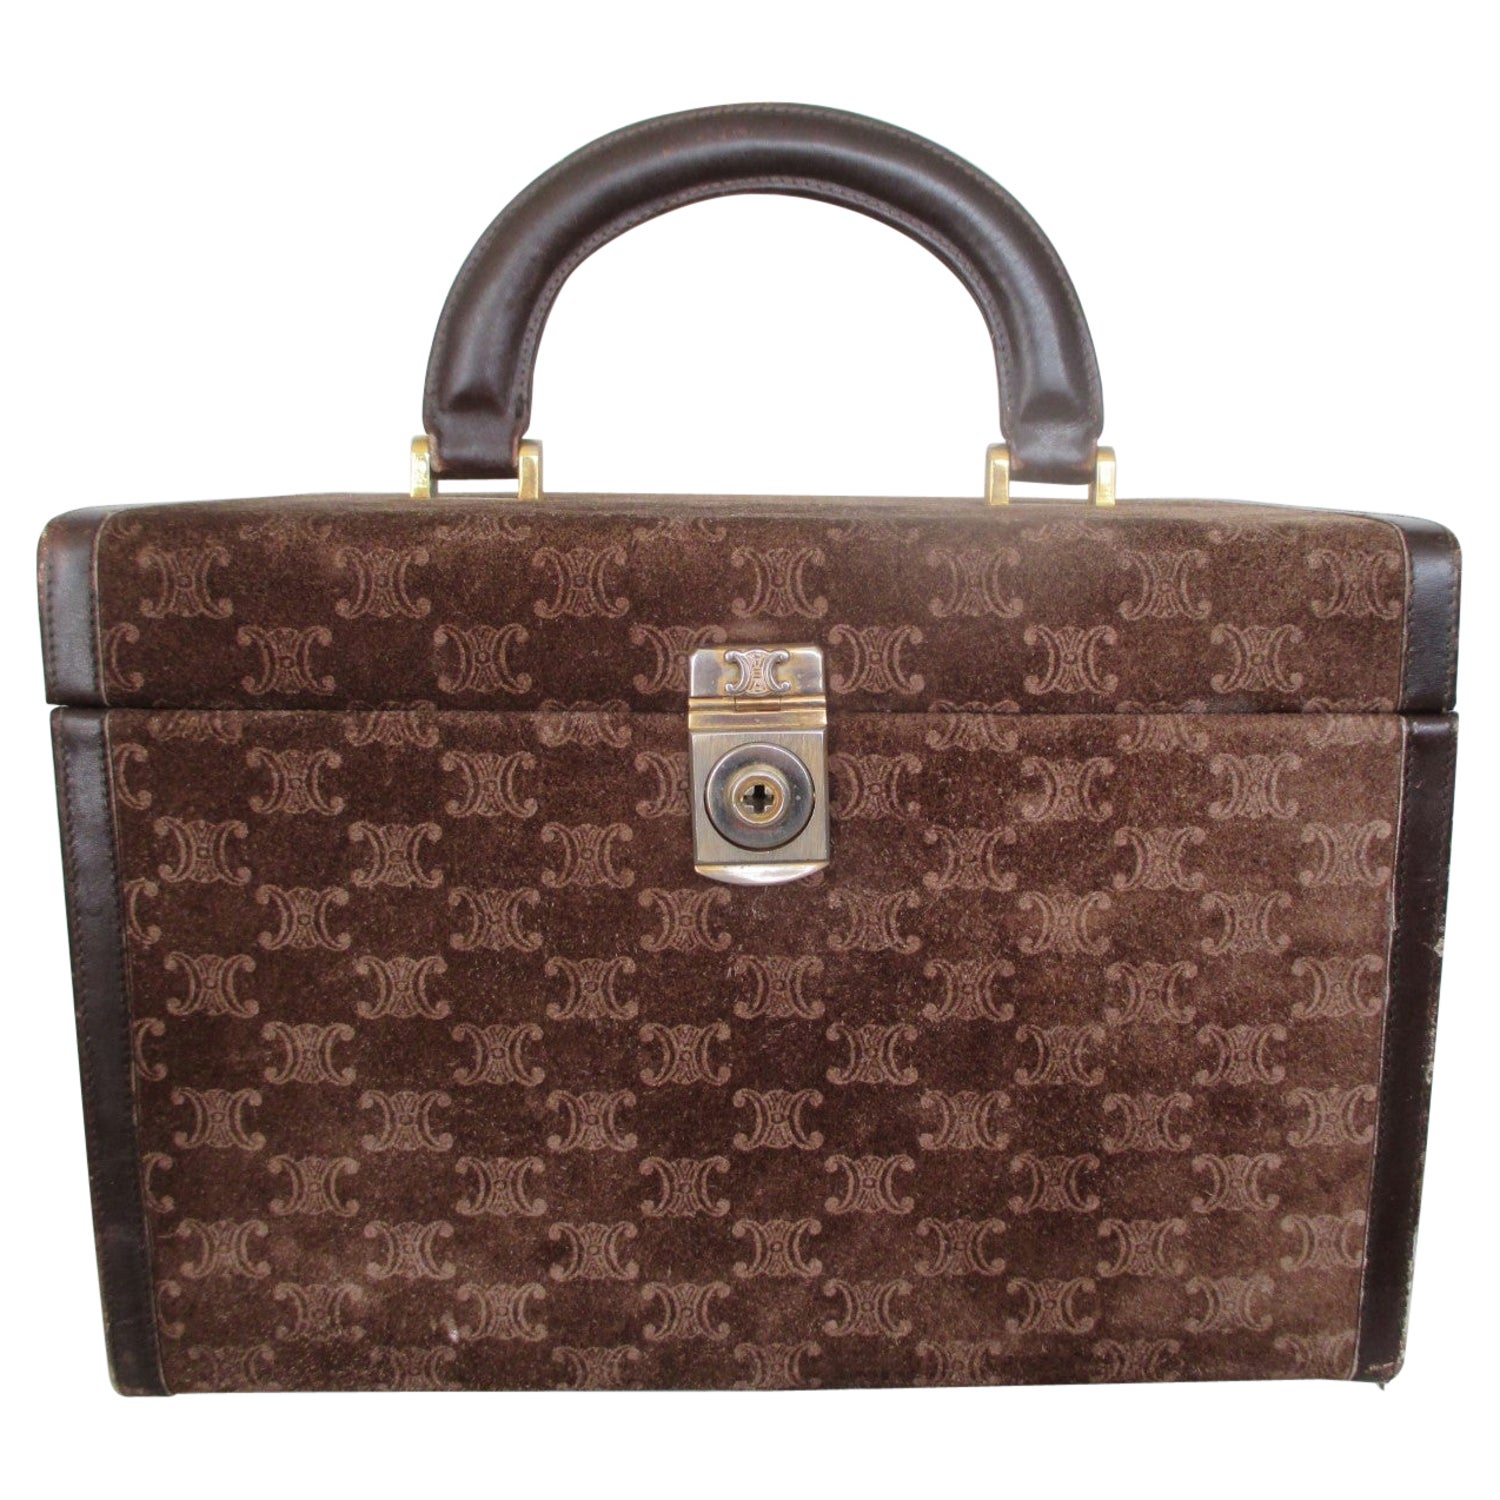 LOUIS VUITTON Keepall 55 strap travel bag customized "Popeye